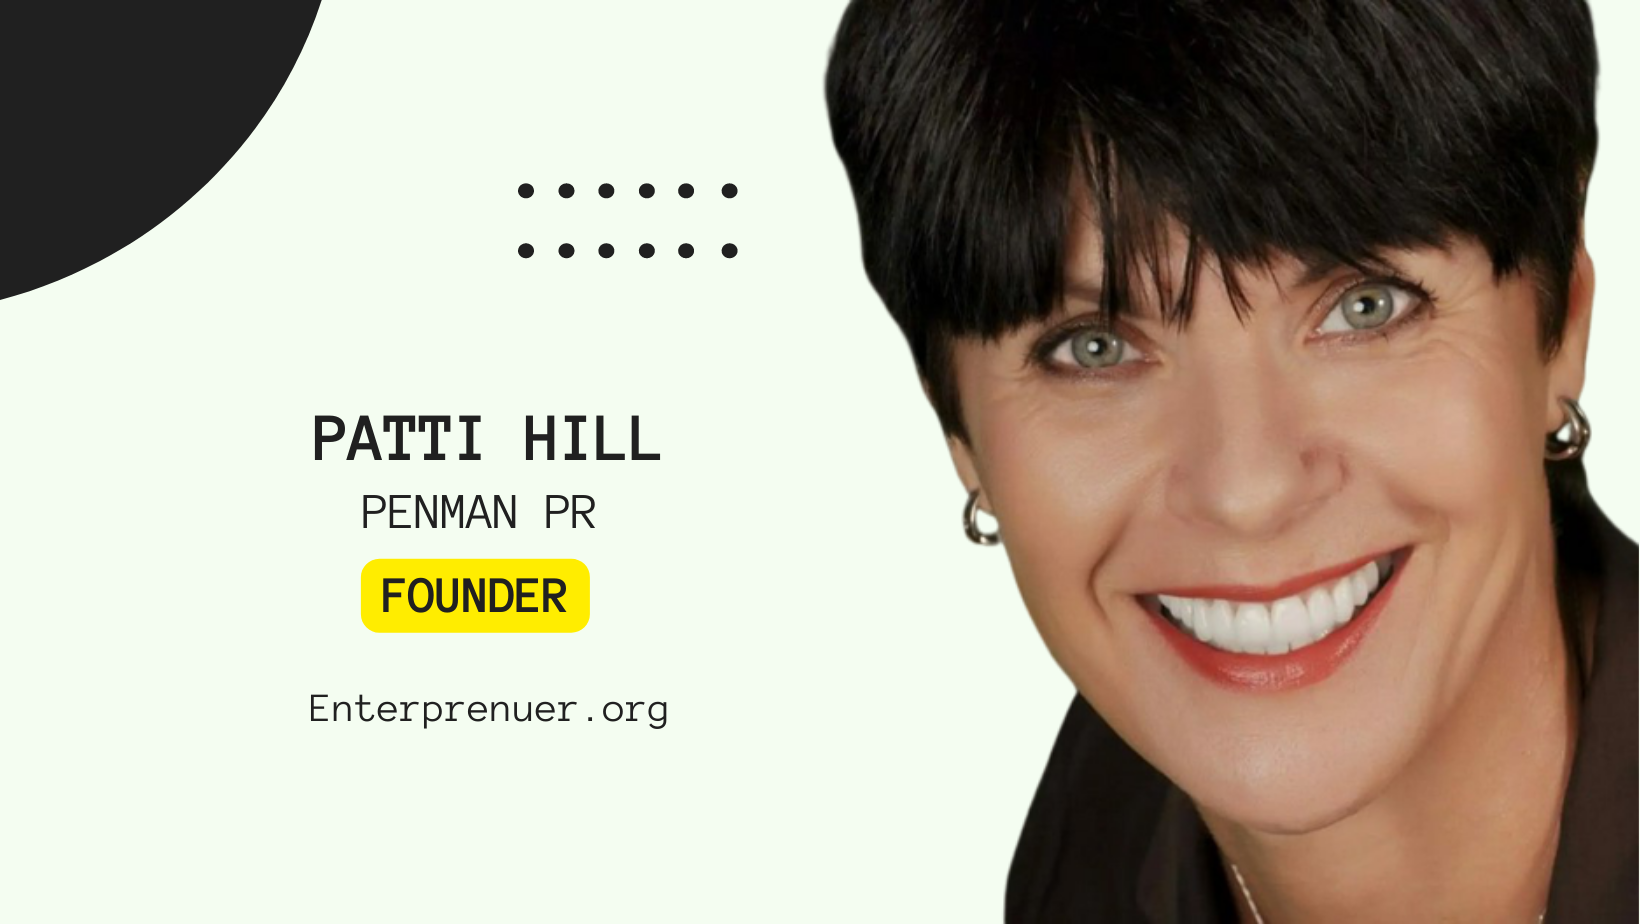 Patti Hill Founder of Penman PR